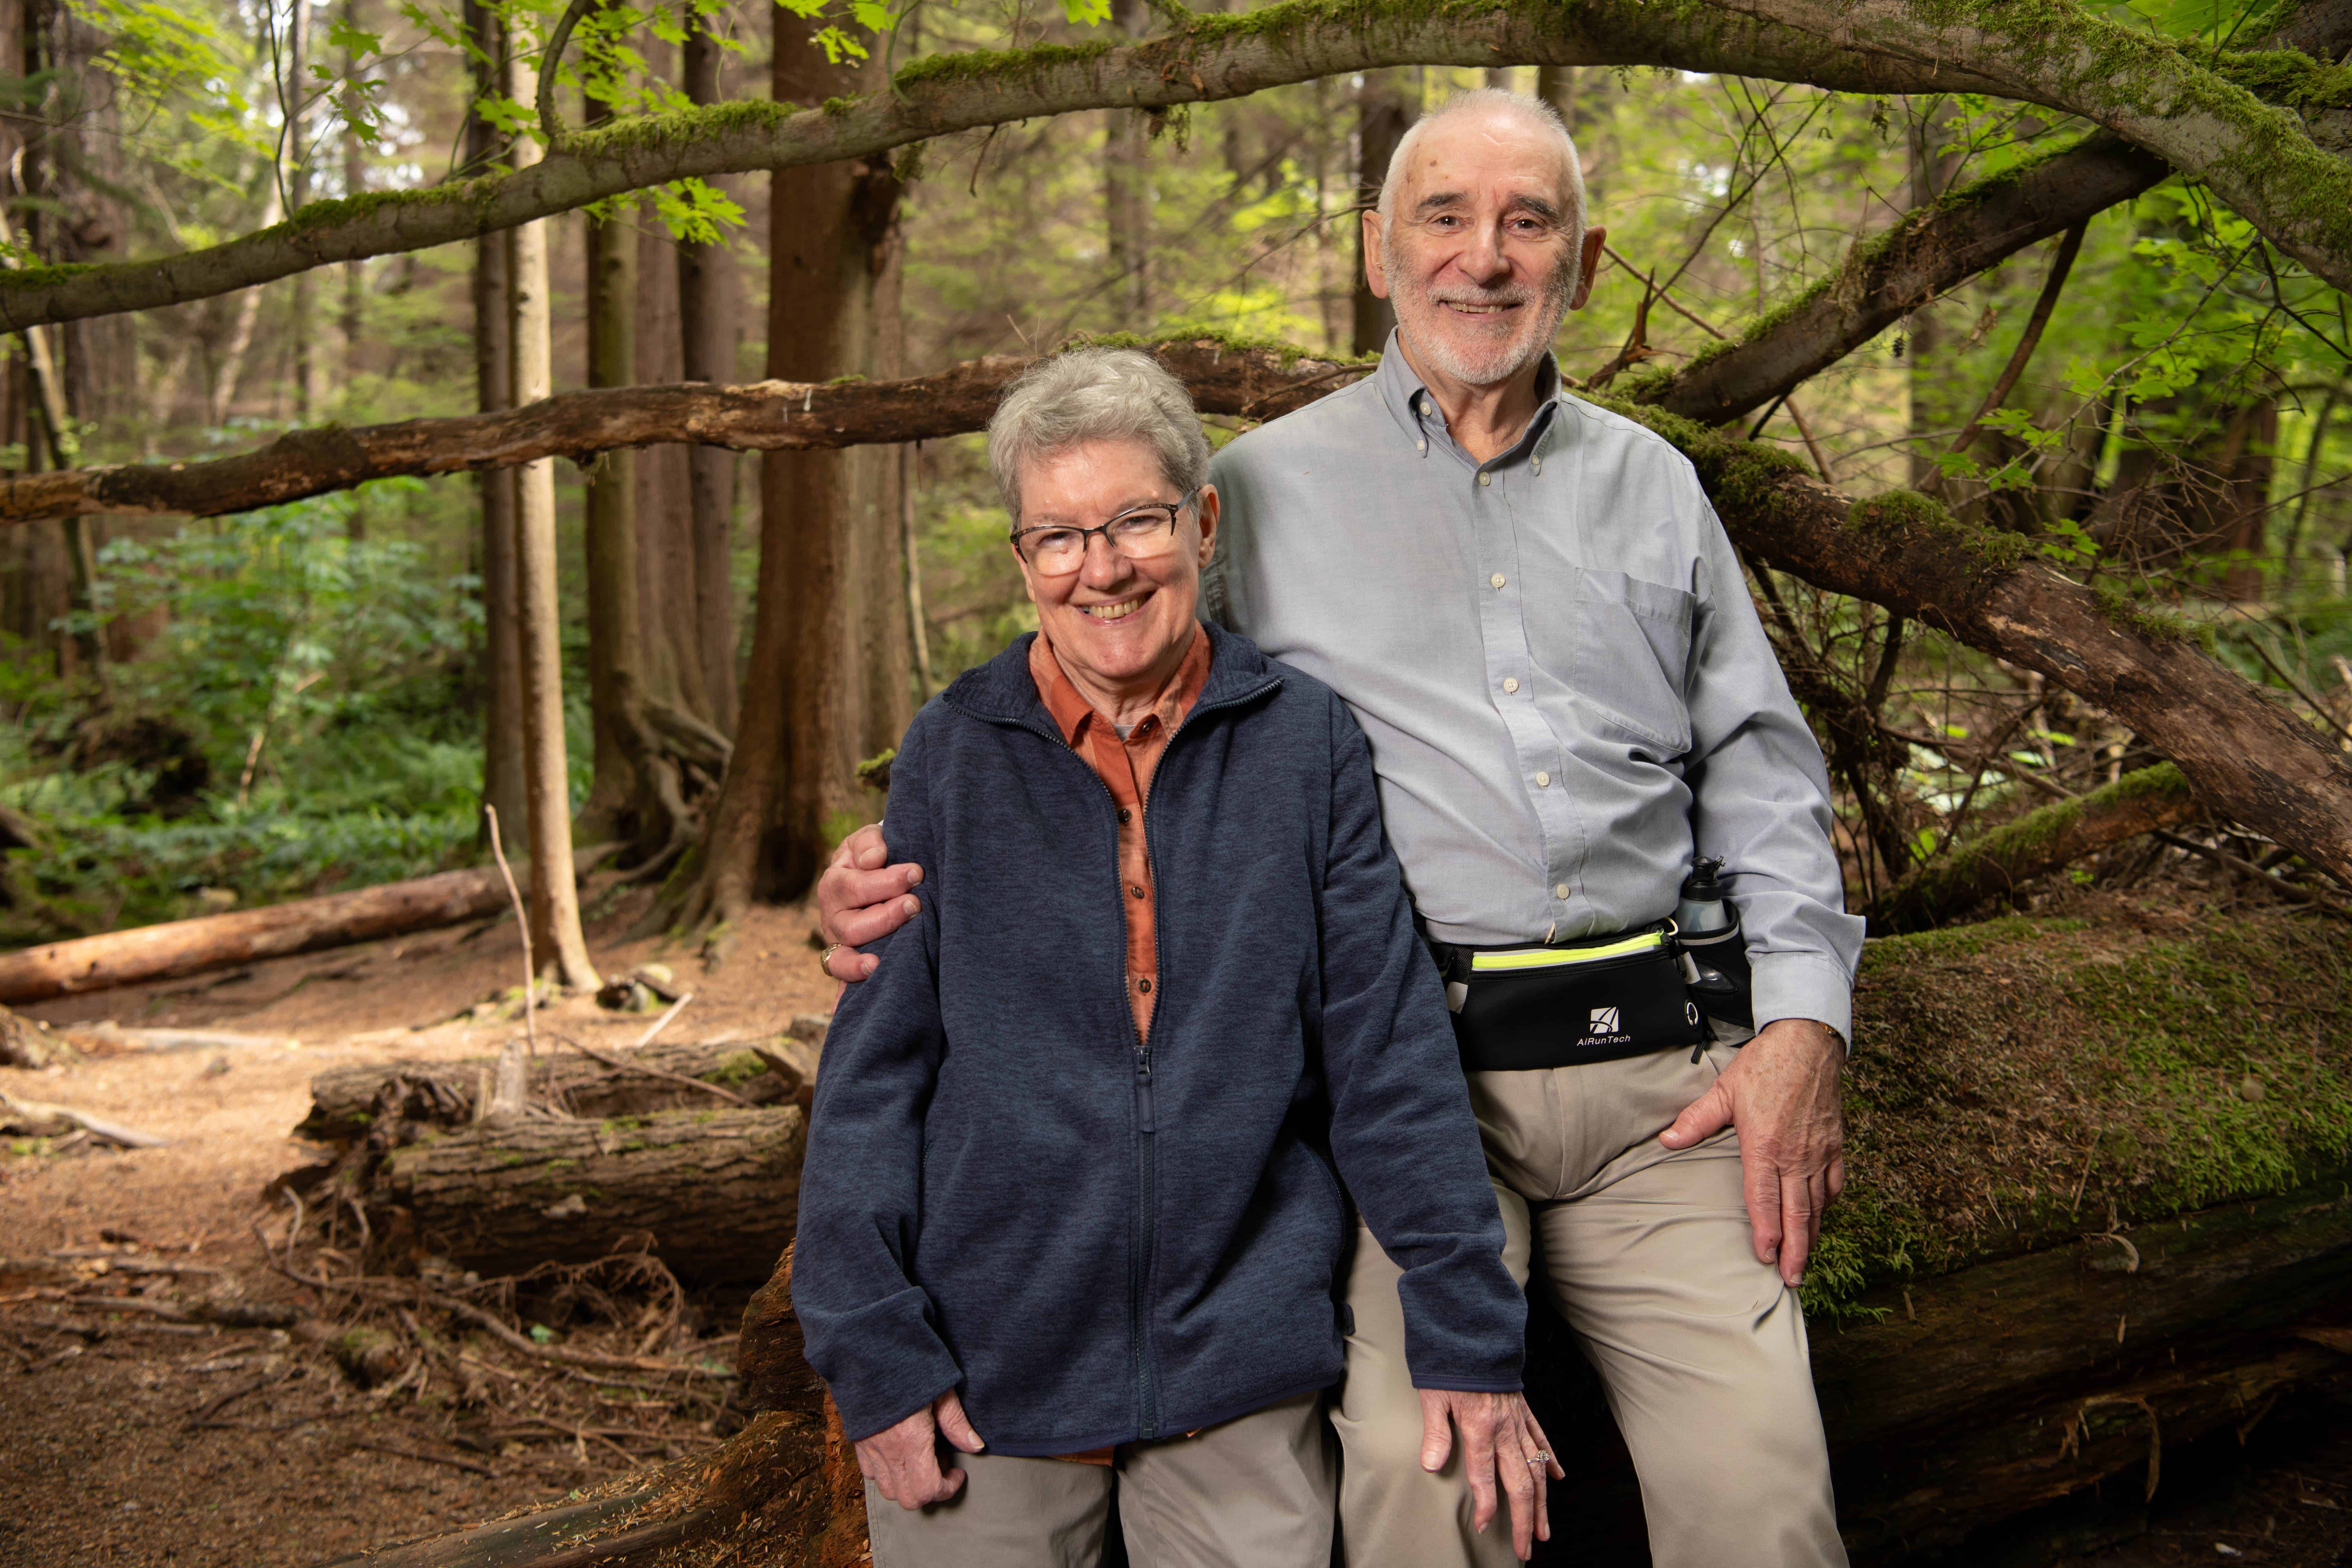 James Stitchman, grateful patient and sepsis survivor, and his wife, Kathy,